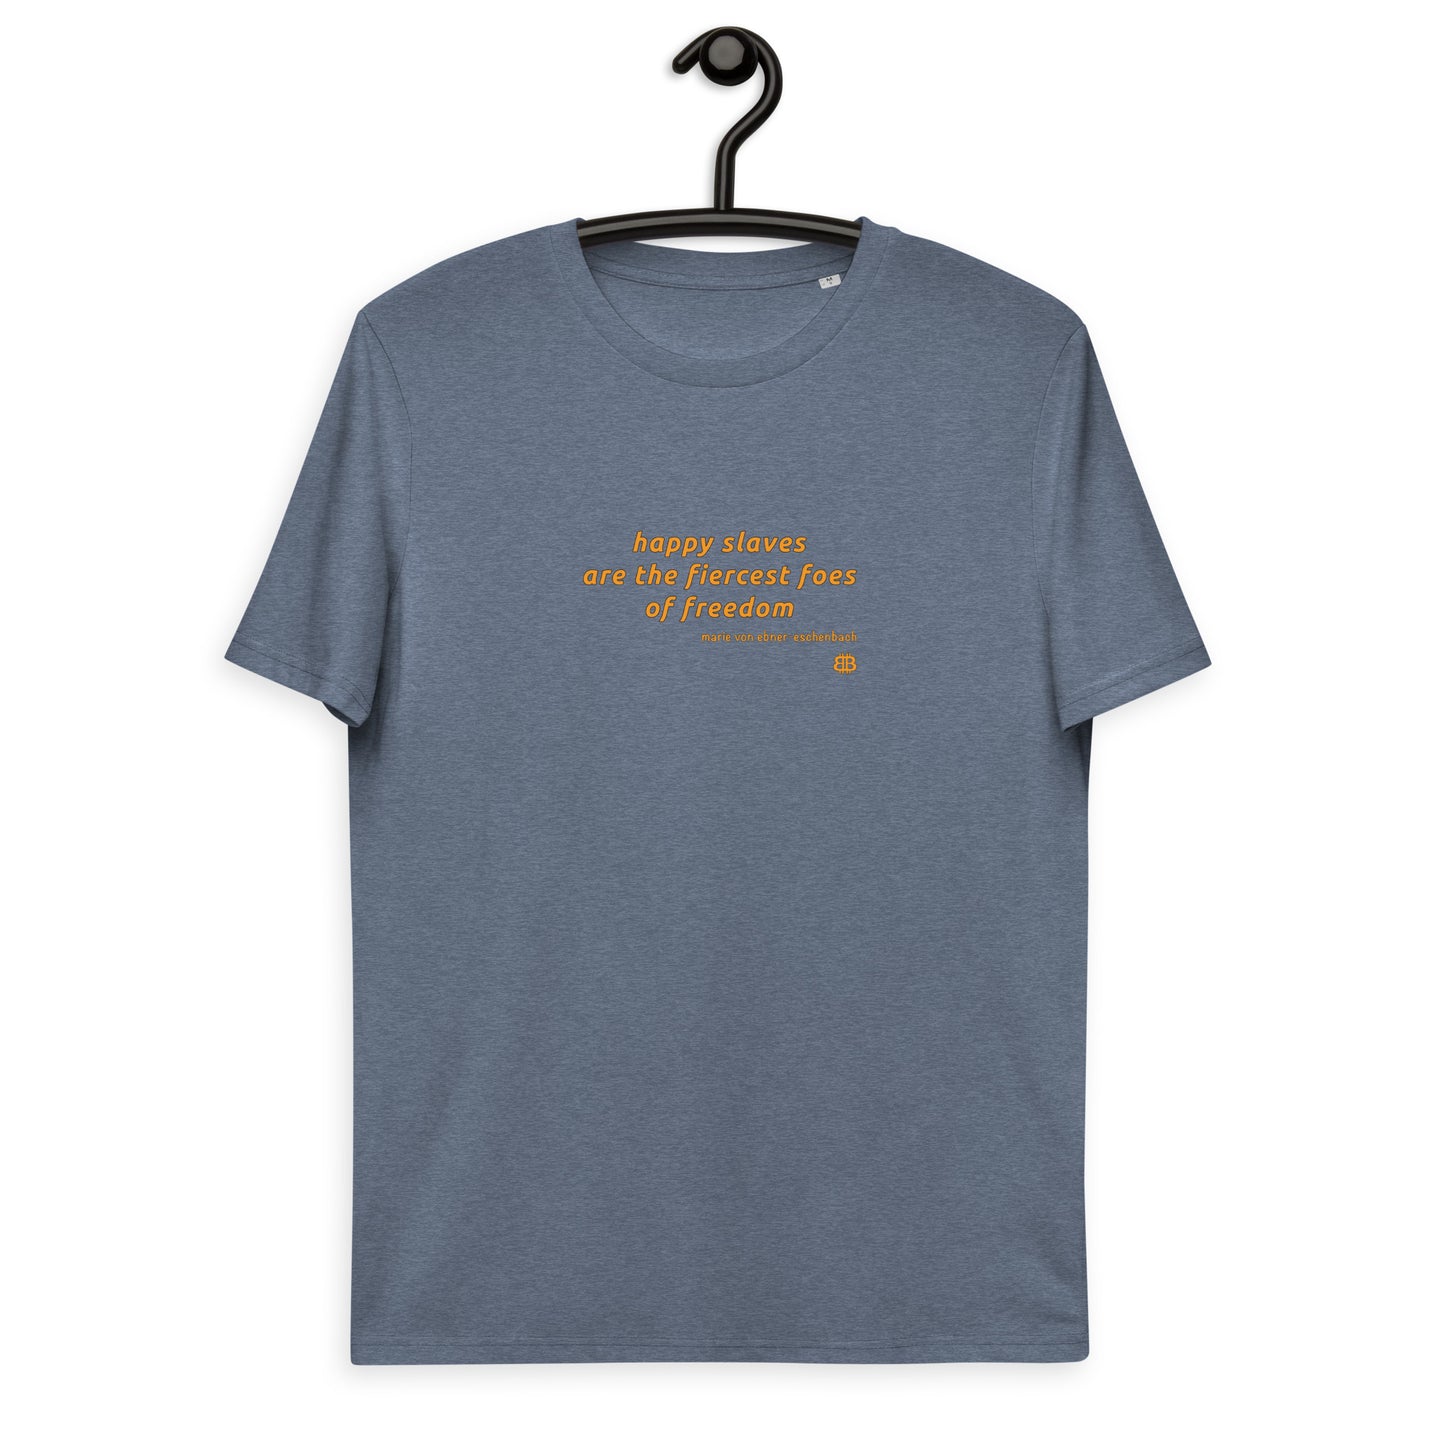 Men's organic cotton t-shirt "Slaves"